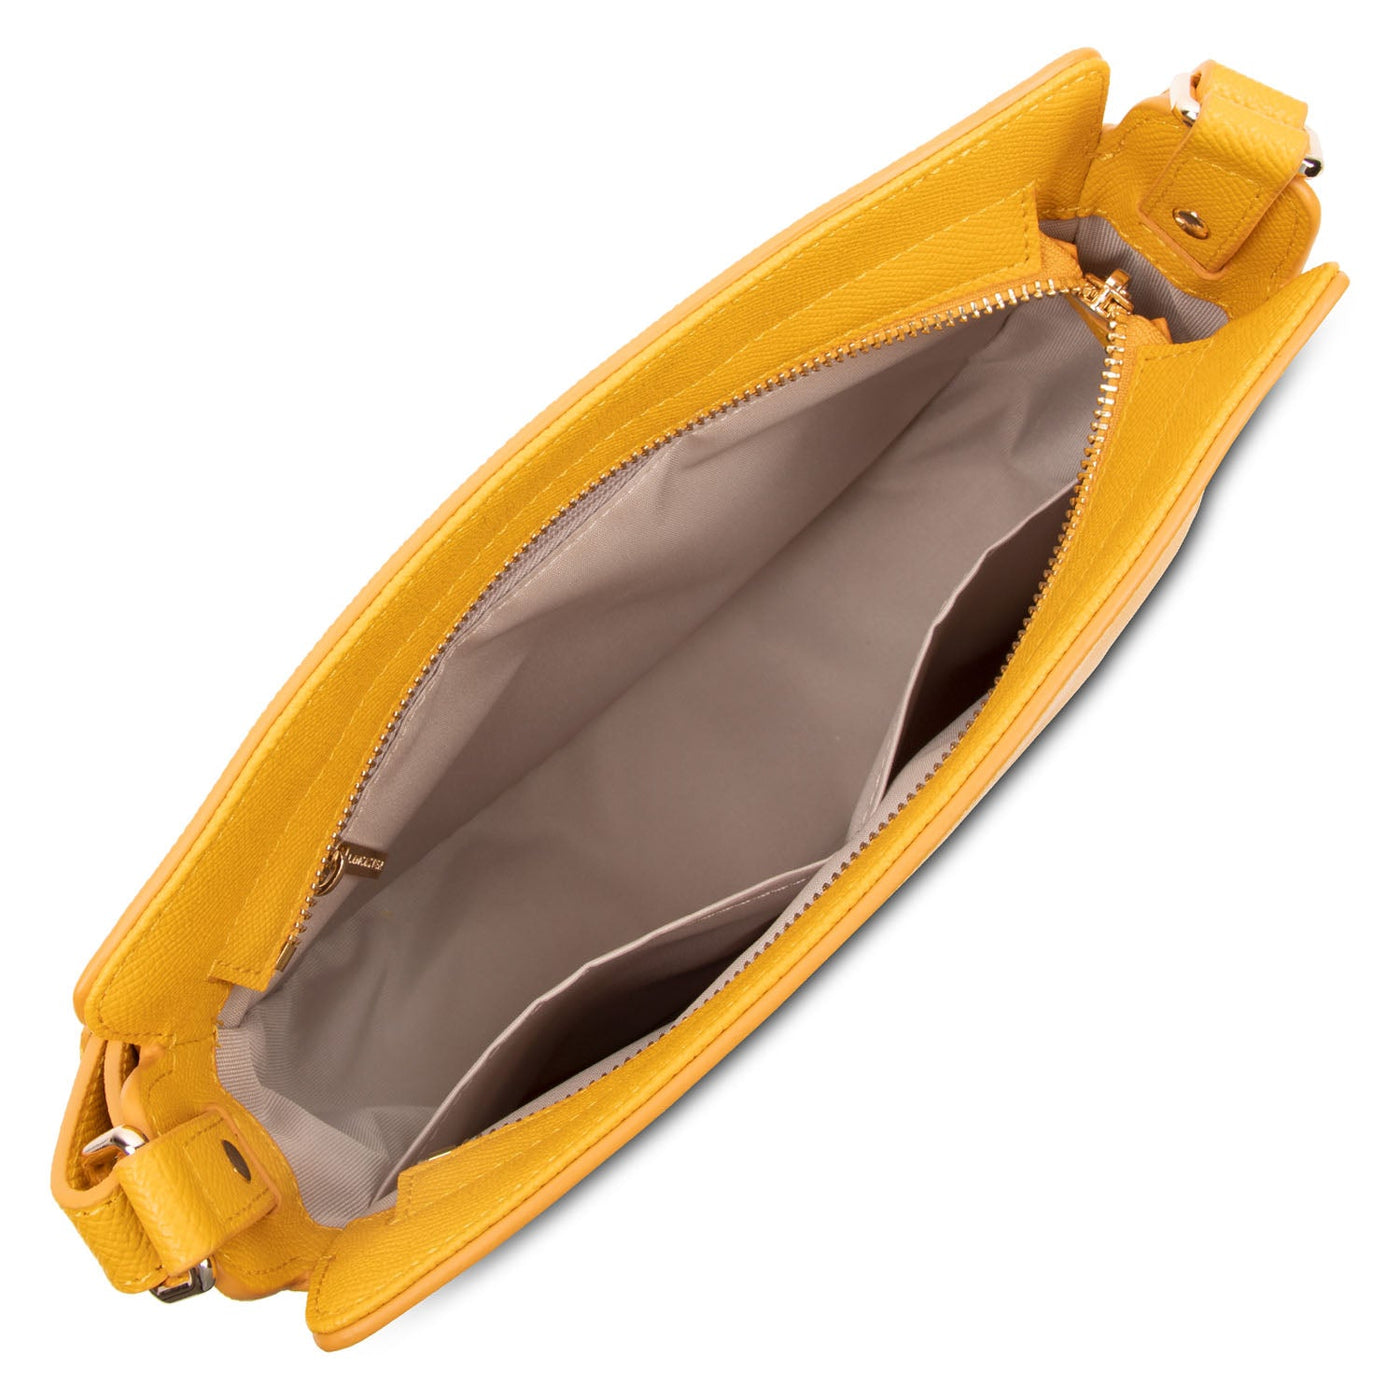 crossbody bag - delphino #couleur_jaune